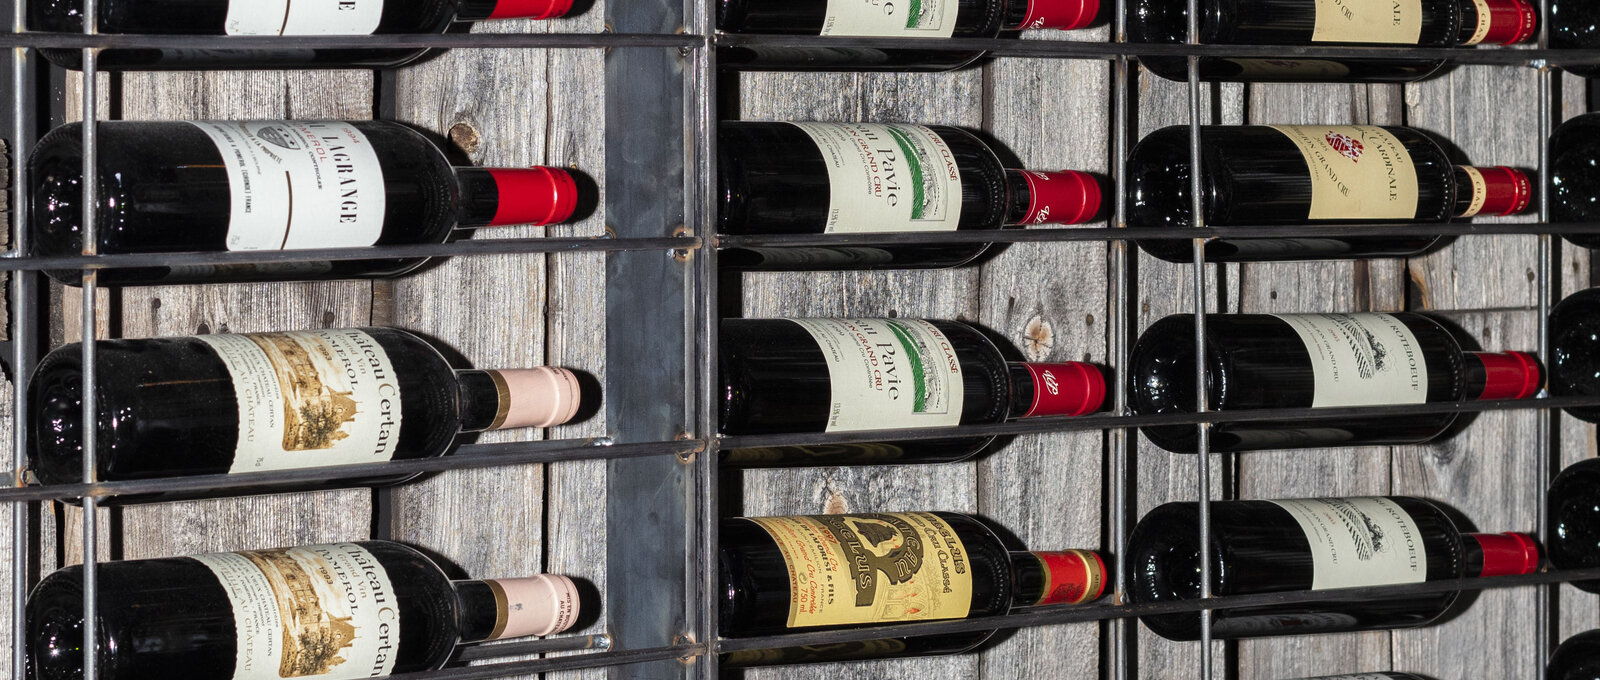 Verkostung Fine wines in Bern